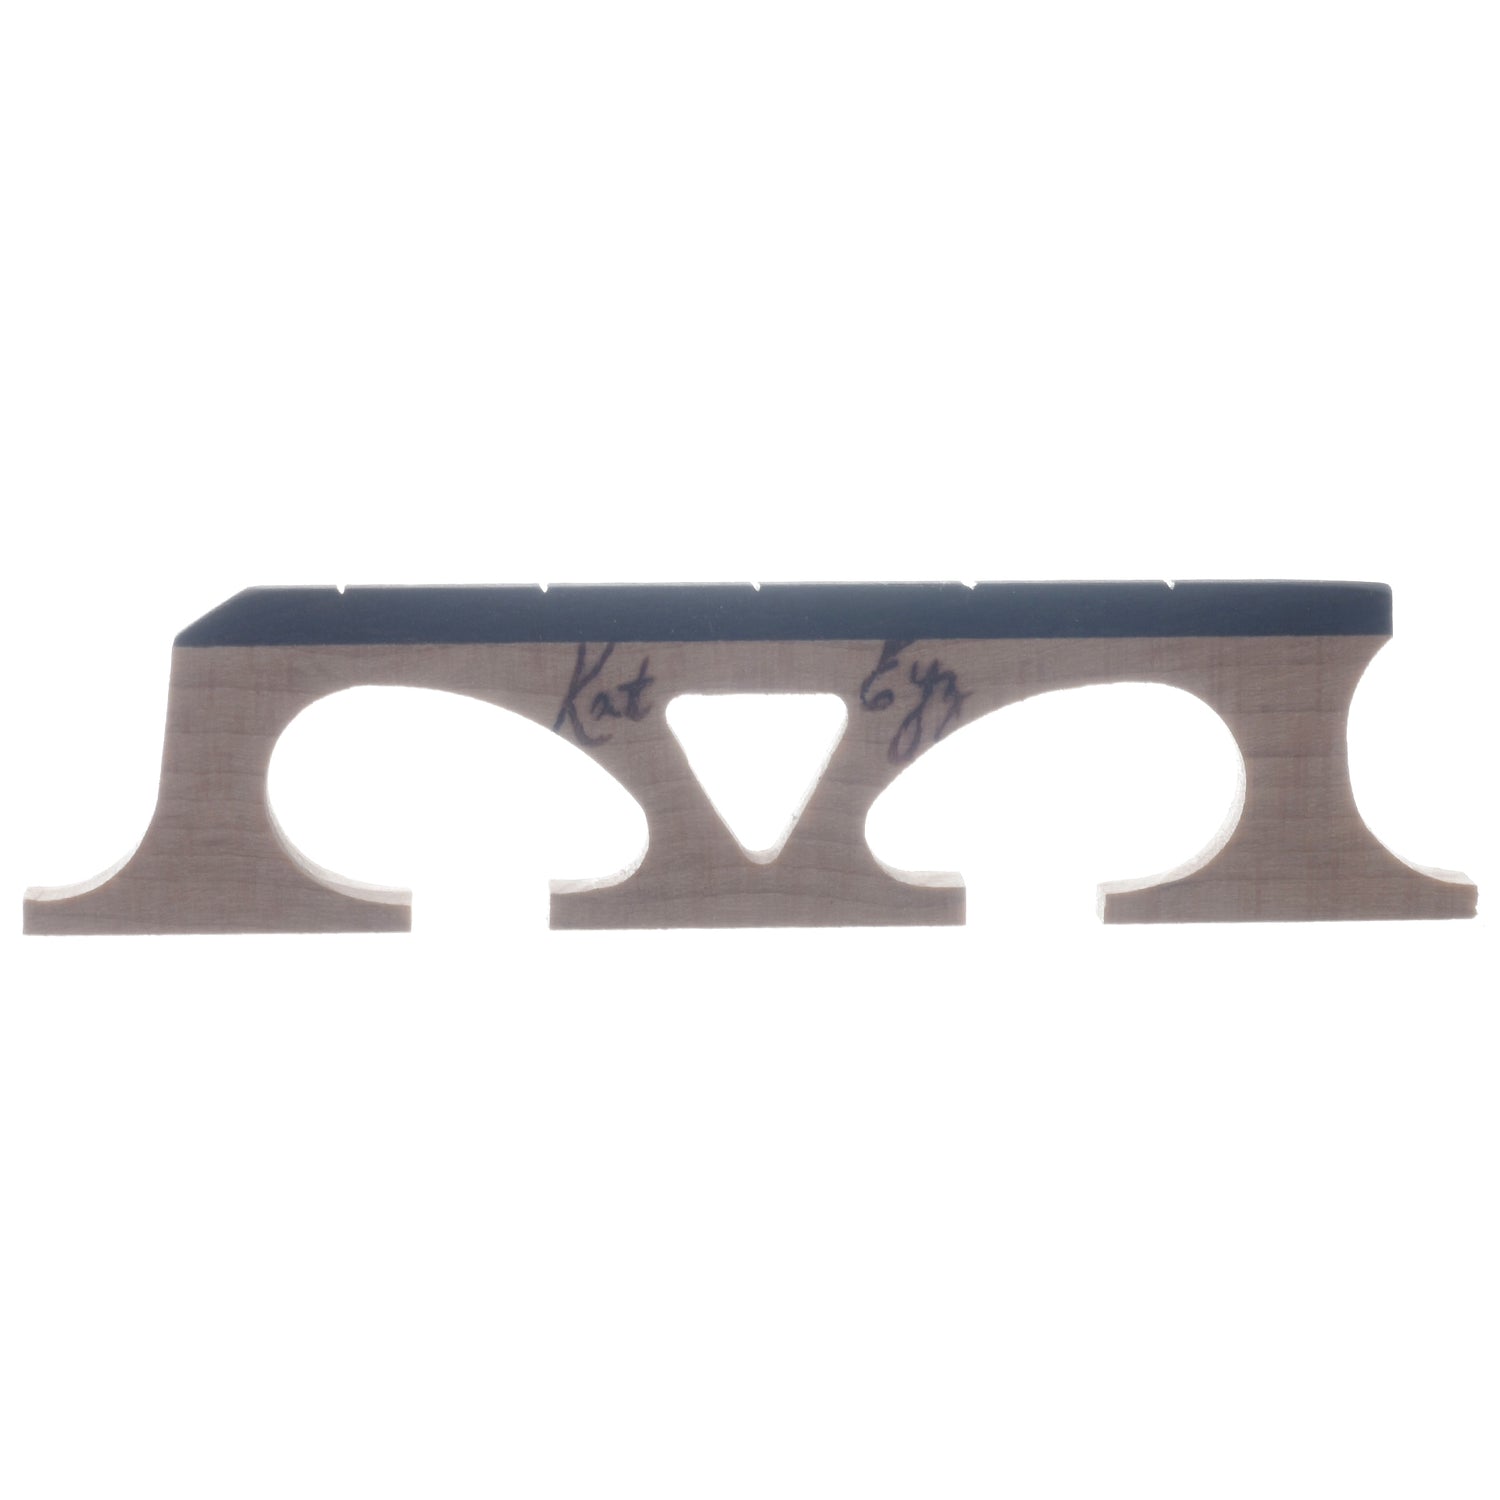 Image 2 of Kat Eyz Old Wood Banjo Bridge, Standard Spaced, 11/16" High - SKU# KEBB1-ST-11/16 : Product Type Accessories & Parts : Elderly Instruments